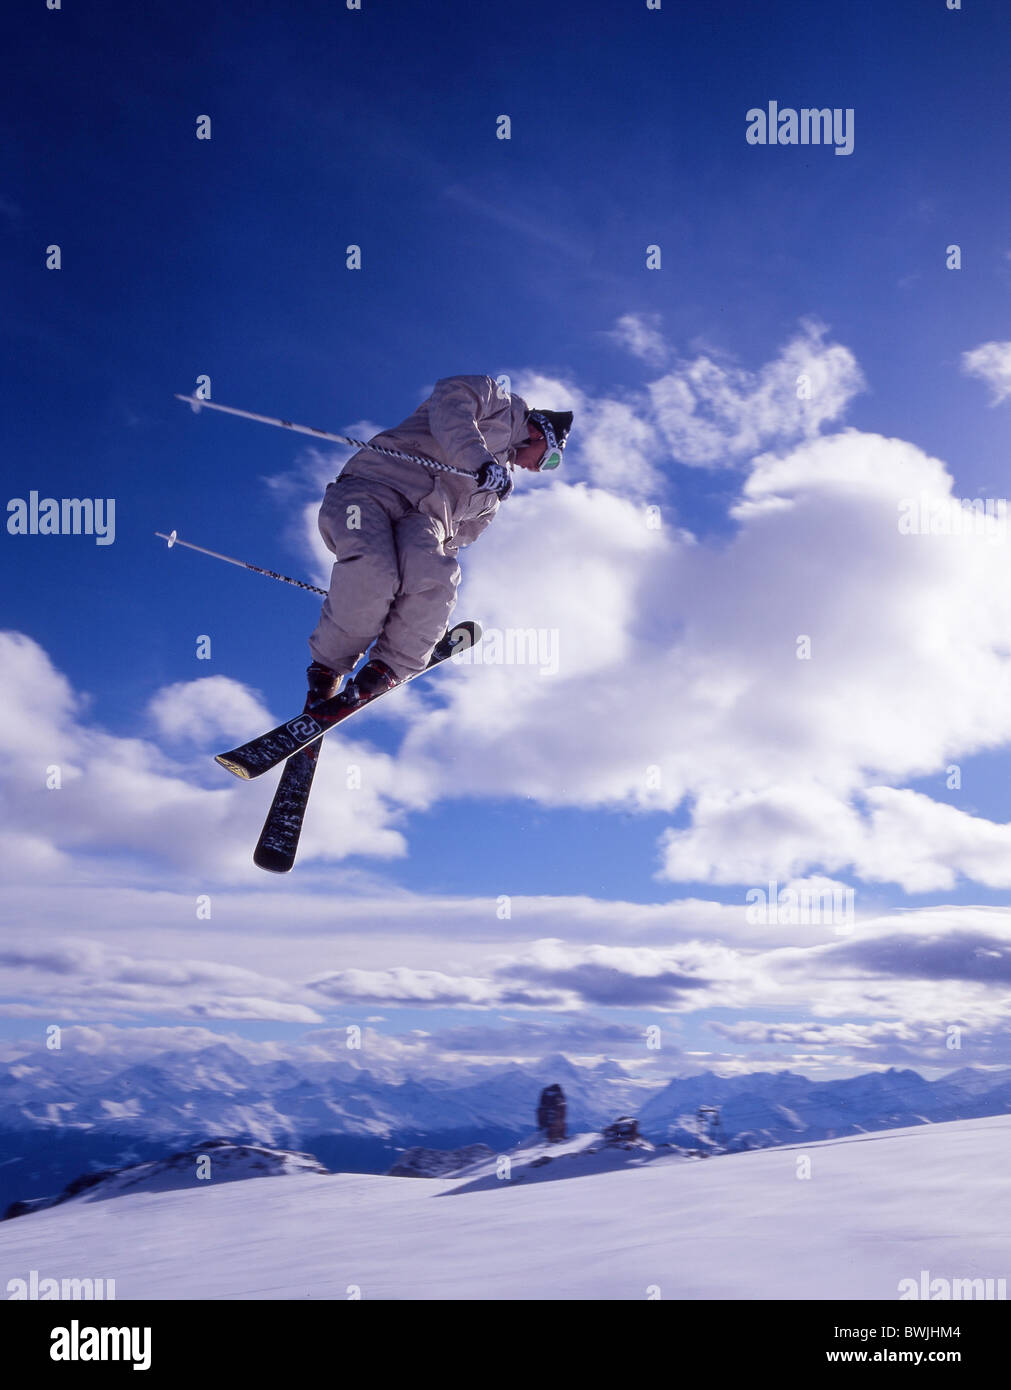 Free skingi ski jump action sky winter sports winter mountains Alps Glacier 3000 Les Diablerets canton Vaud Stock Photo